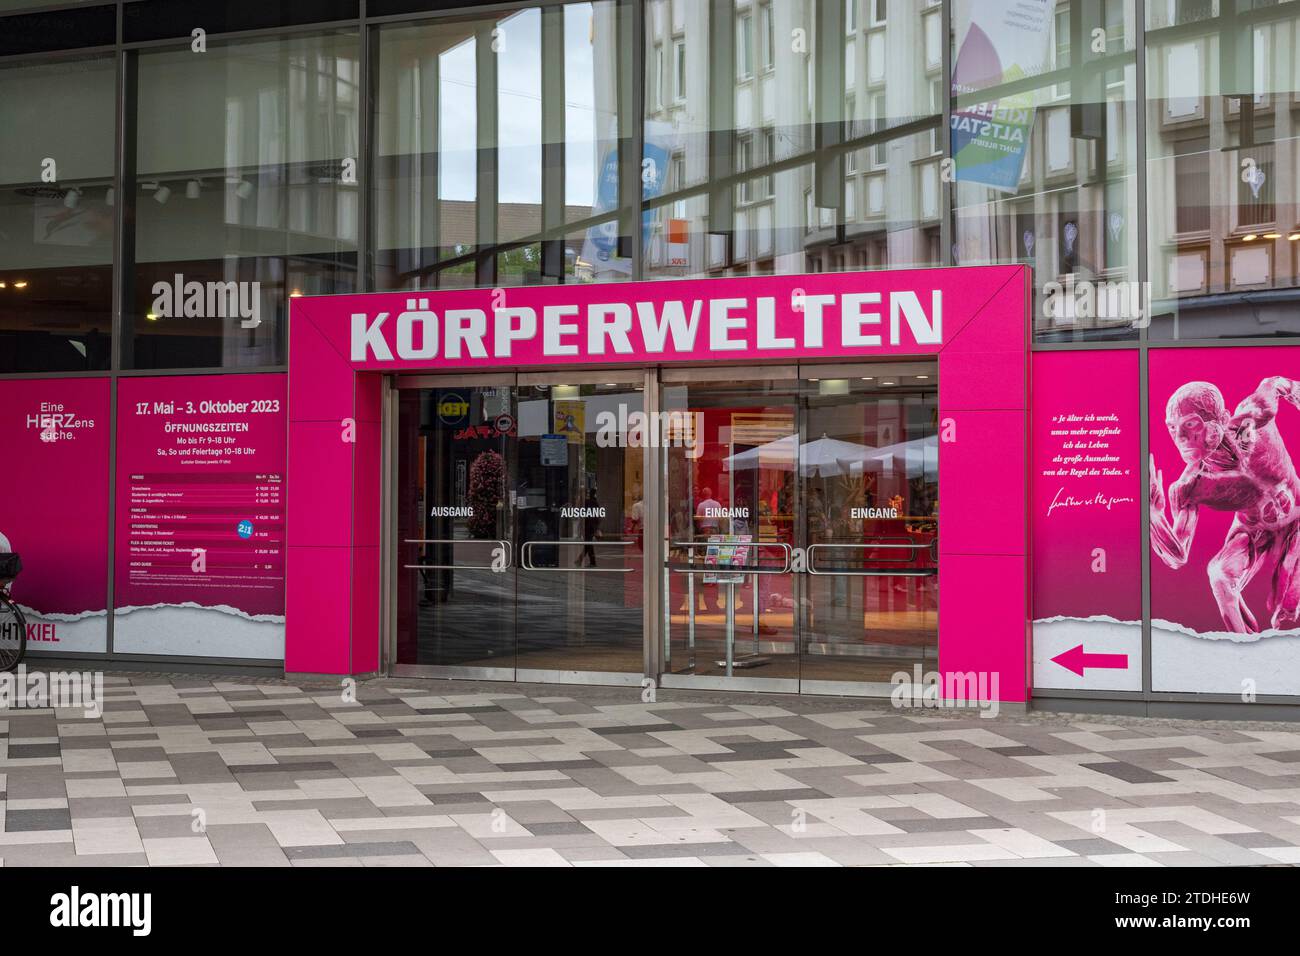 The Körperwelten exhibition (Body Works) in Kiel, Germany. Stock Photo